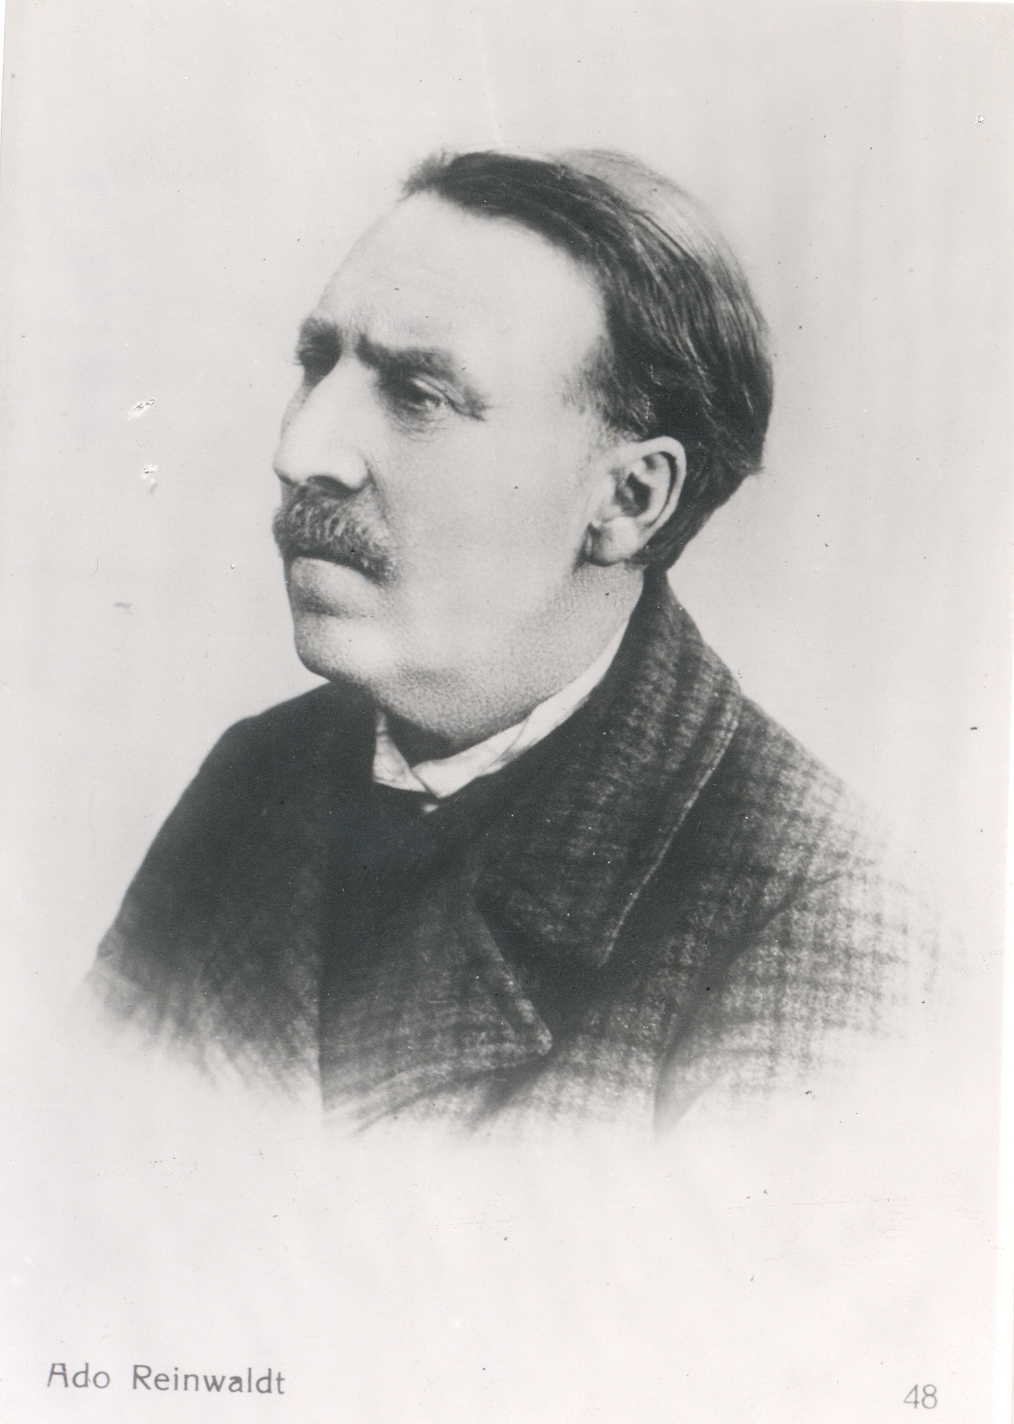 A. Reinwaldt, writer